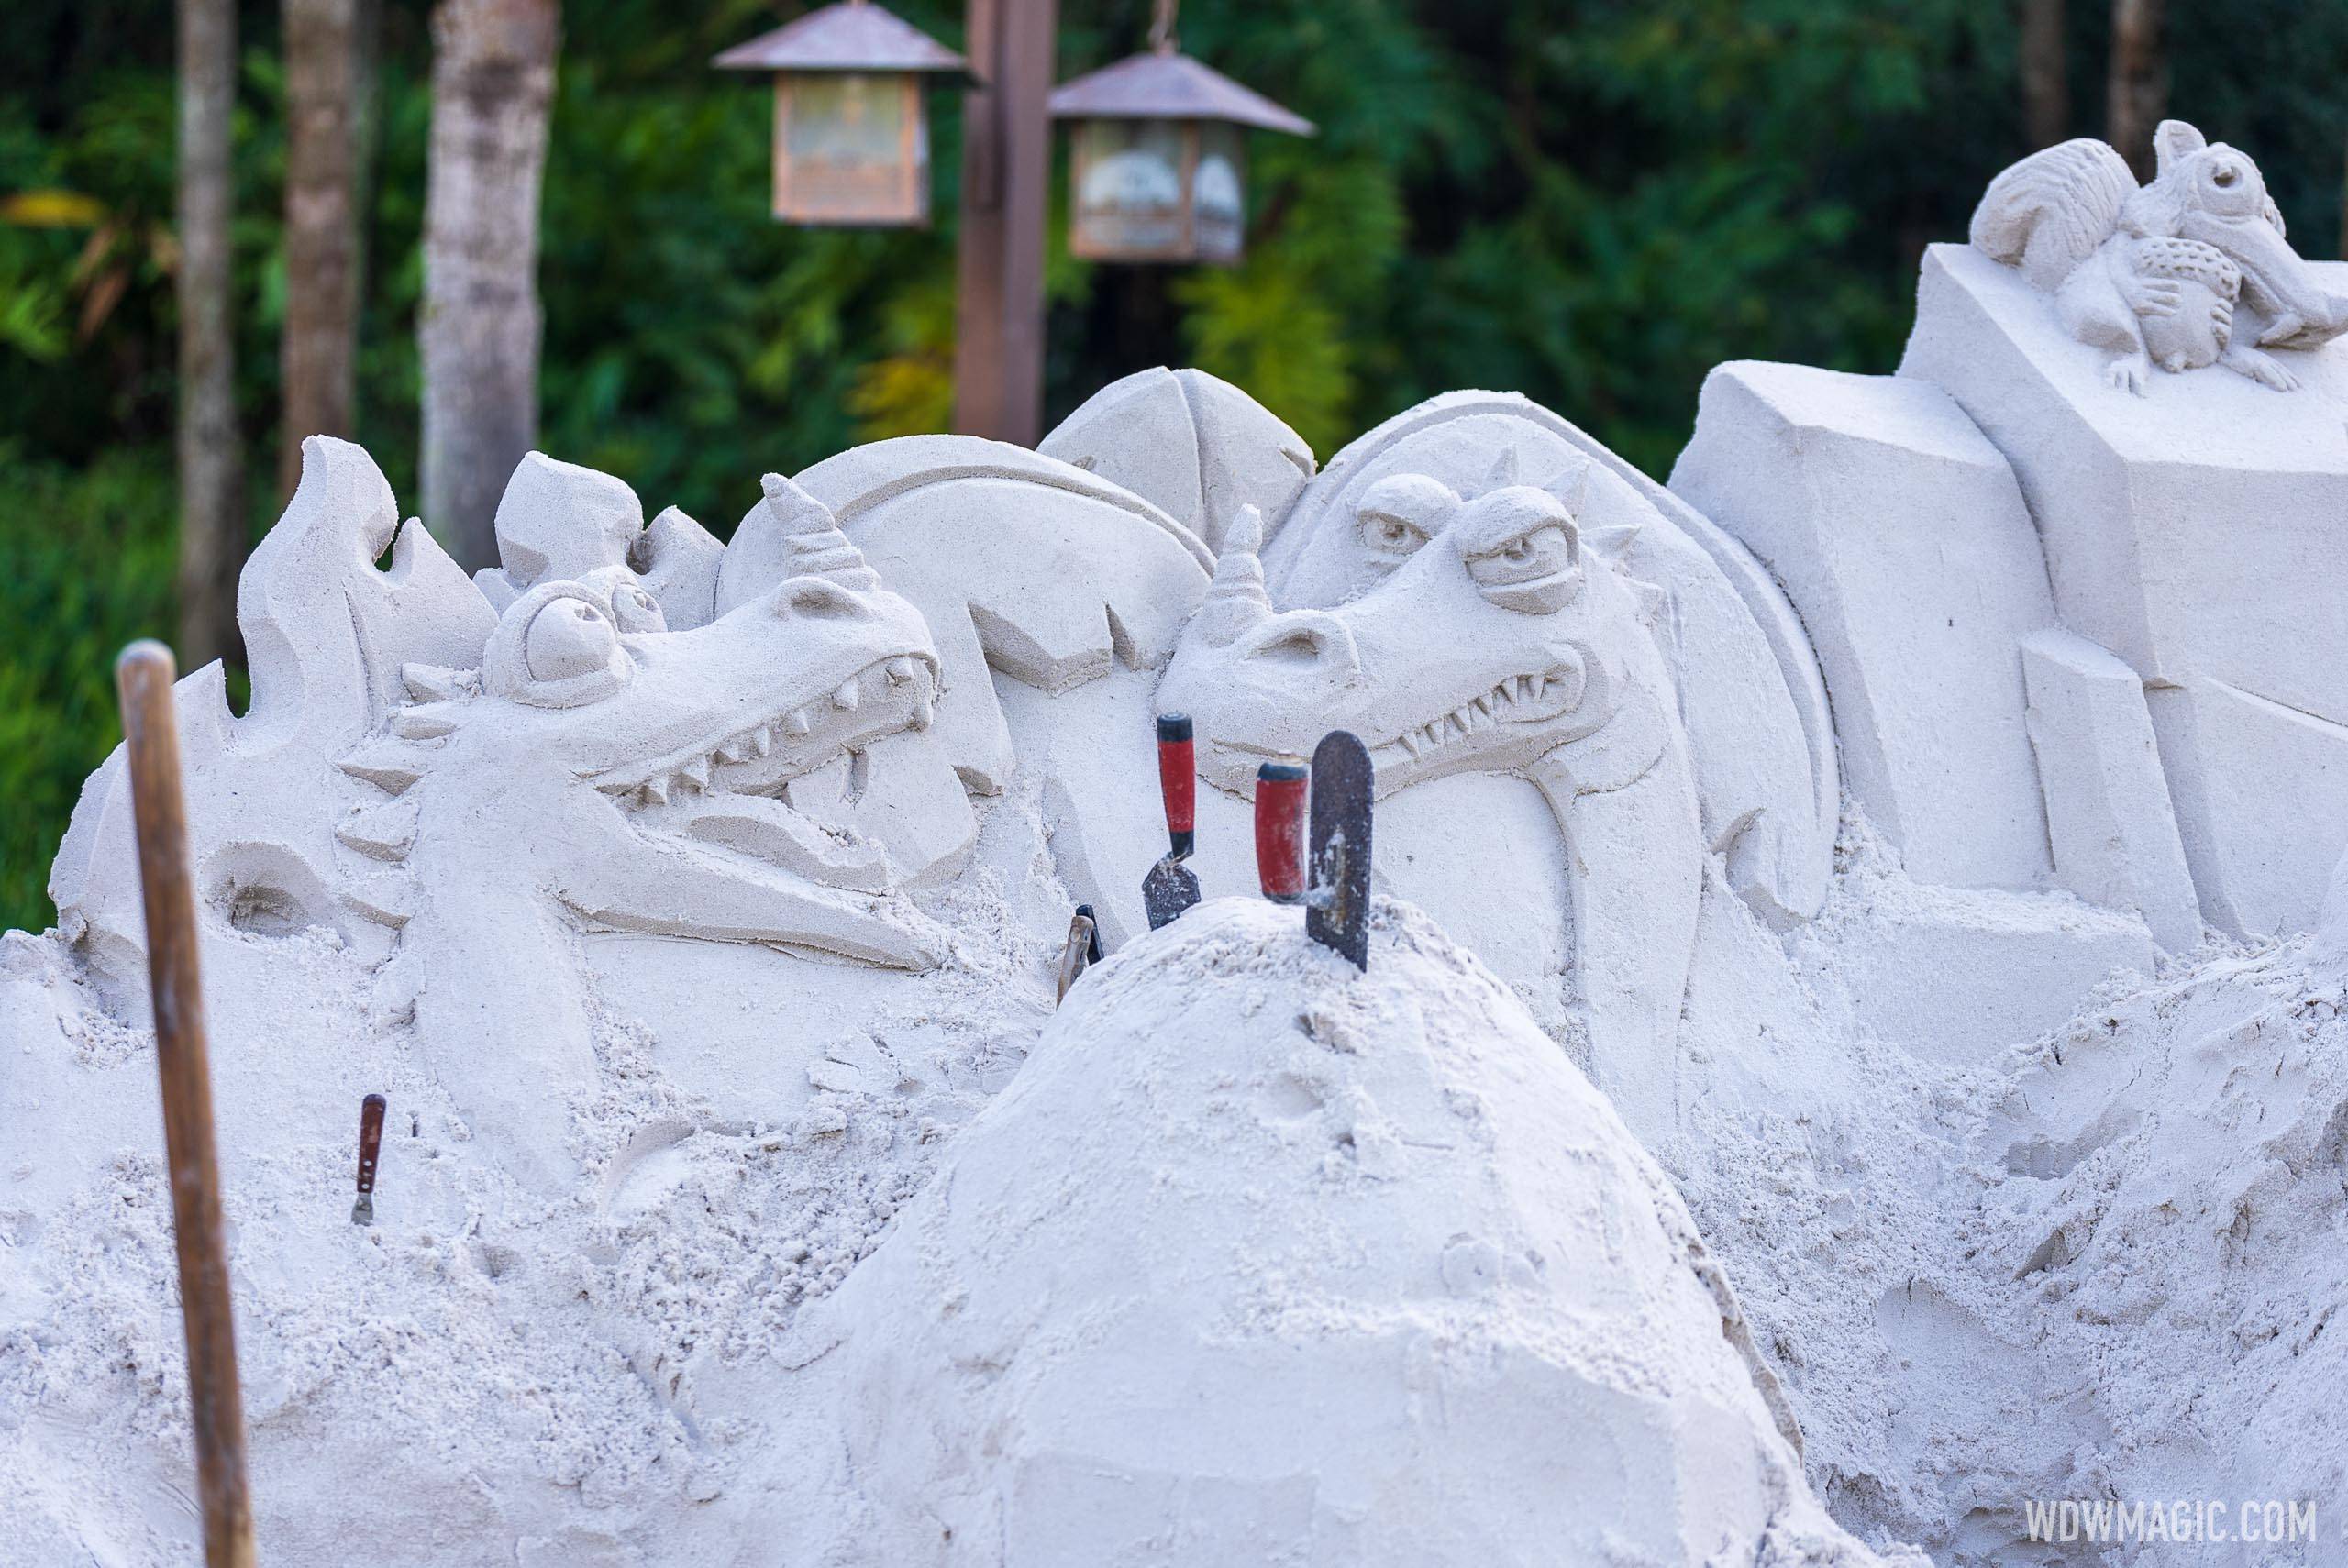 Disney Sand Magic festival celebrates Disneyland Paris 25th anniversary  with stunning new sand sculptures - Inside the Magic